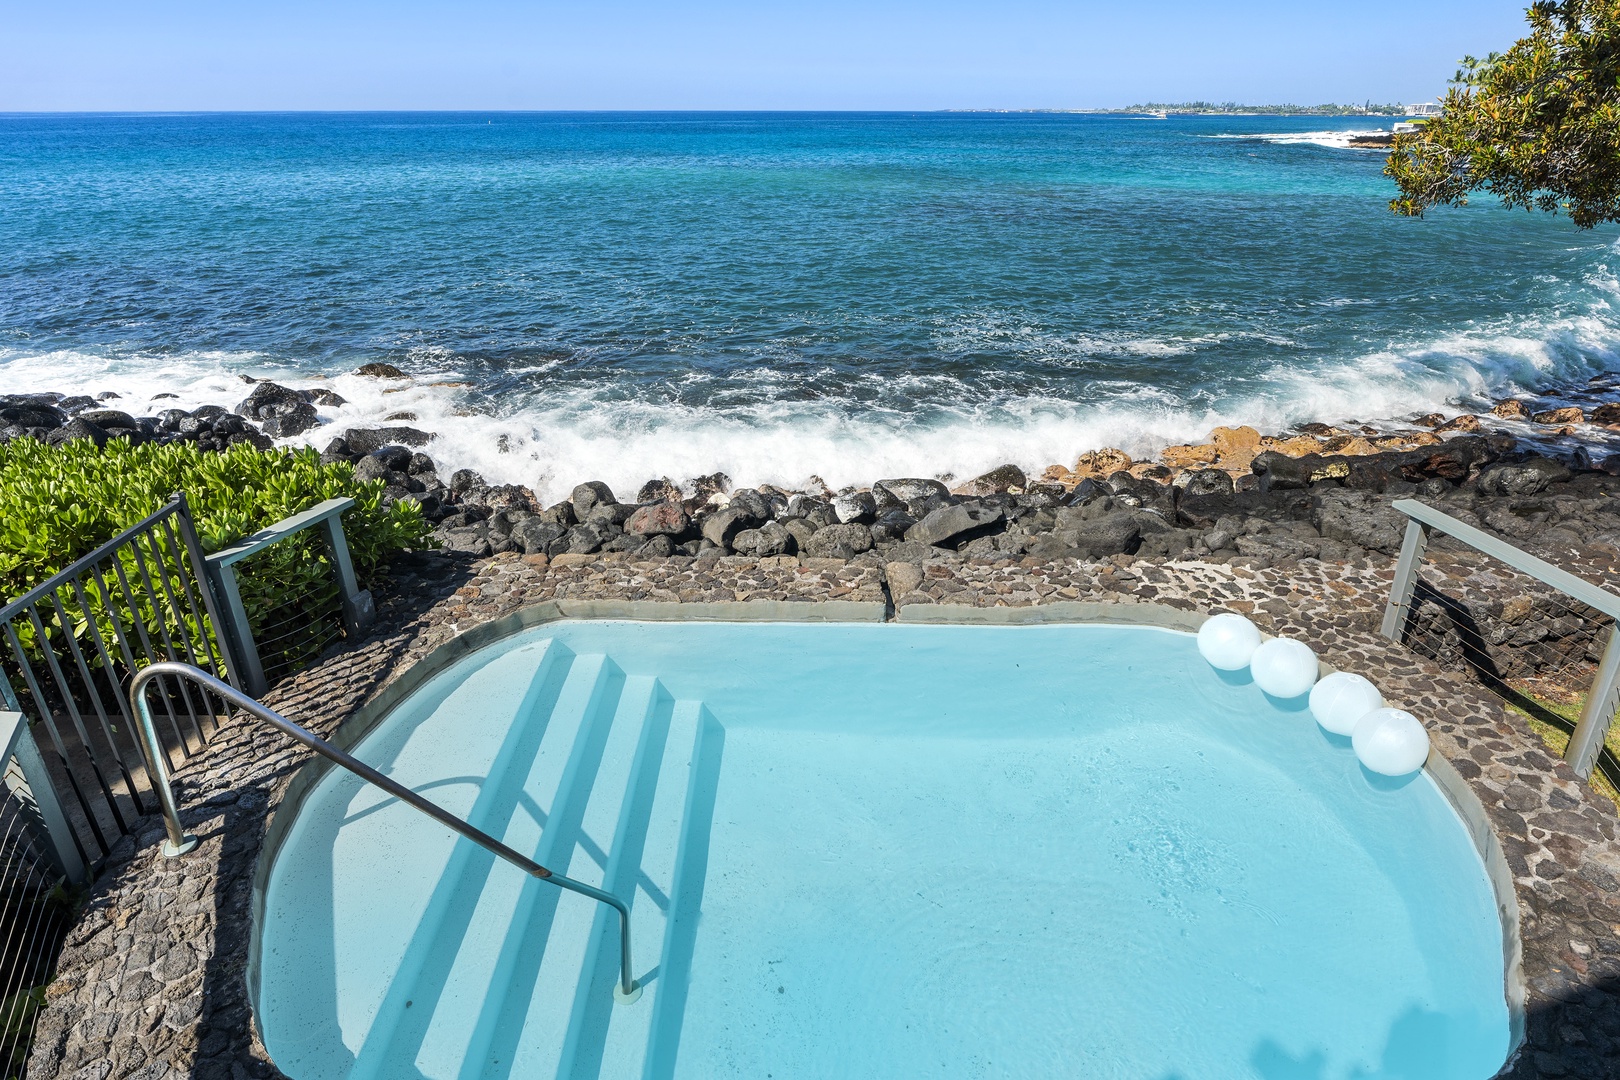 Kailua-Kona Vacation Rentals, Hale Kope Kai - Take a dip while watching the waves crash ashore